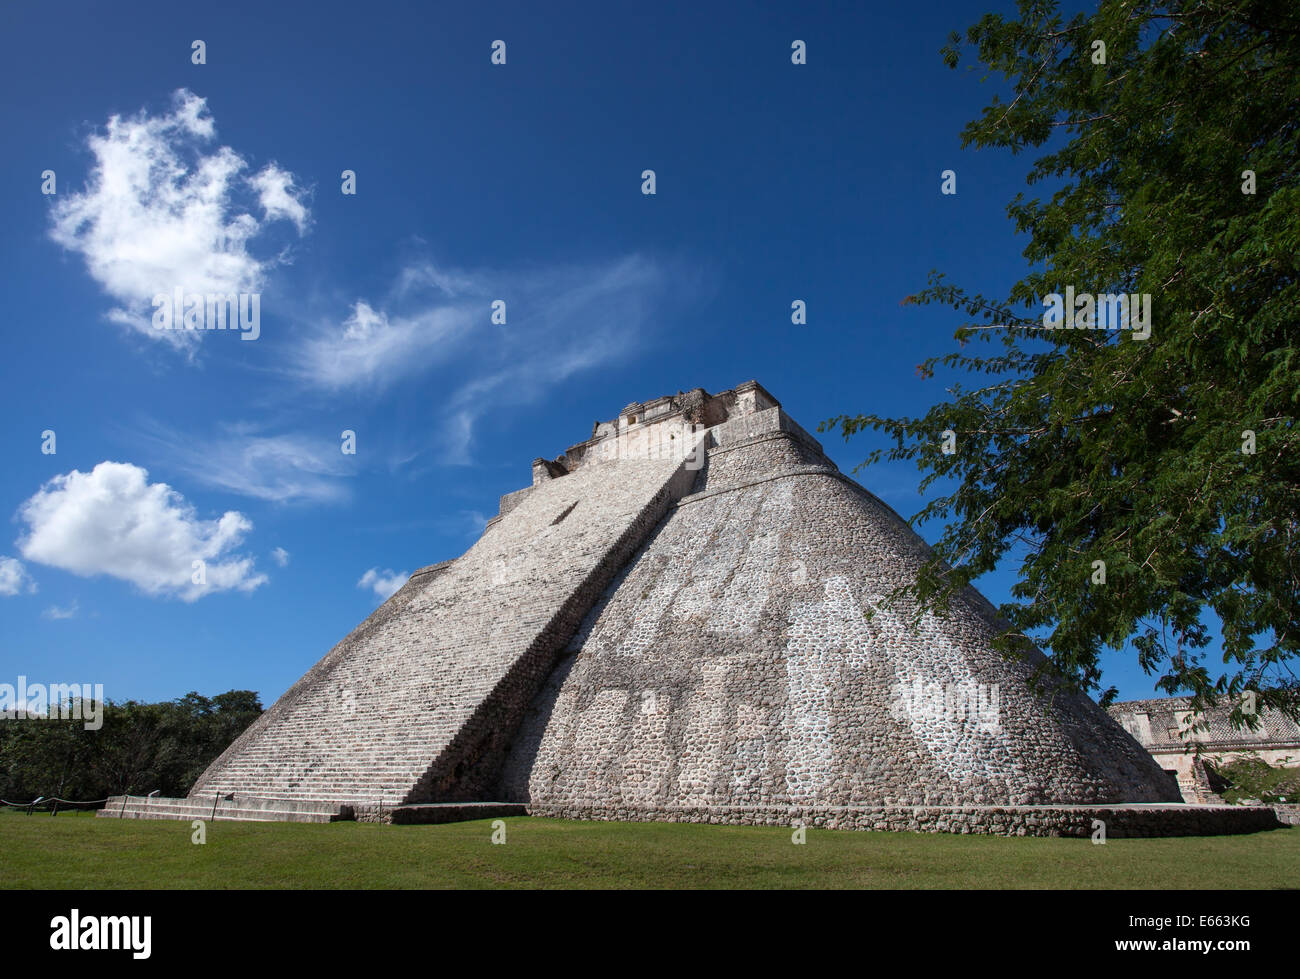 The Sorcerer's Pyramid at Uxmal, Yucatan, Mexico. Stock Photo